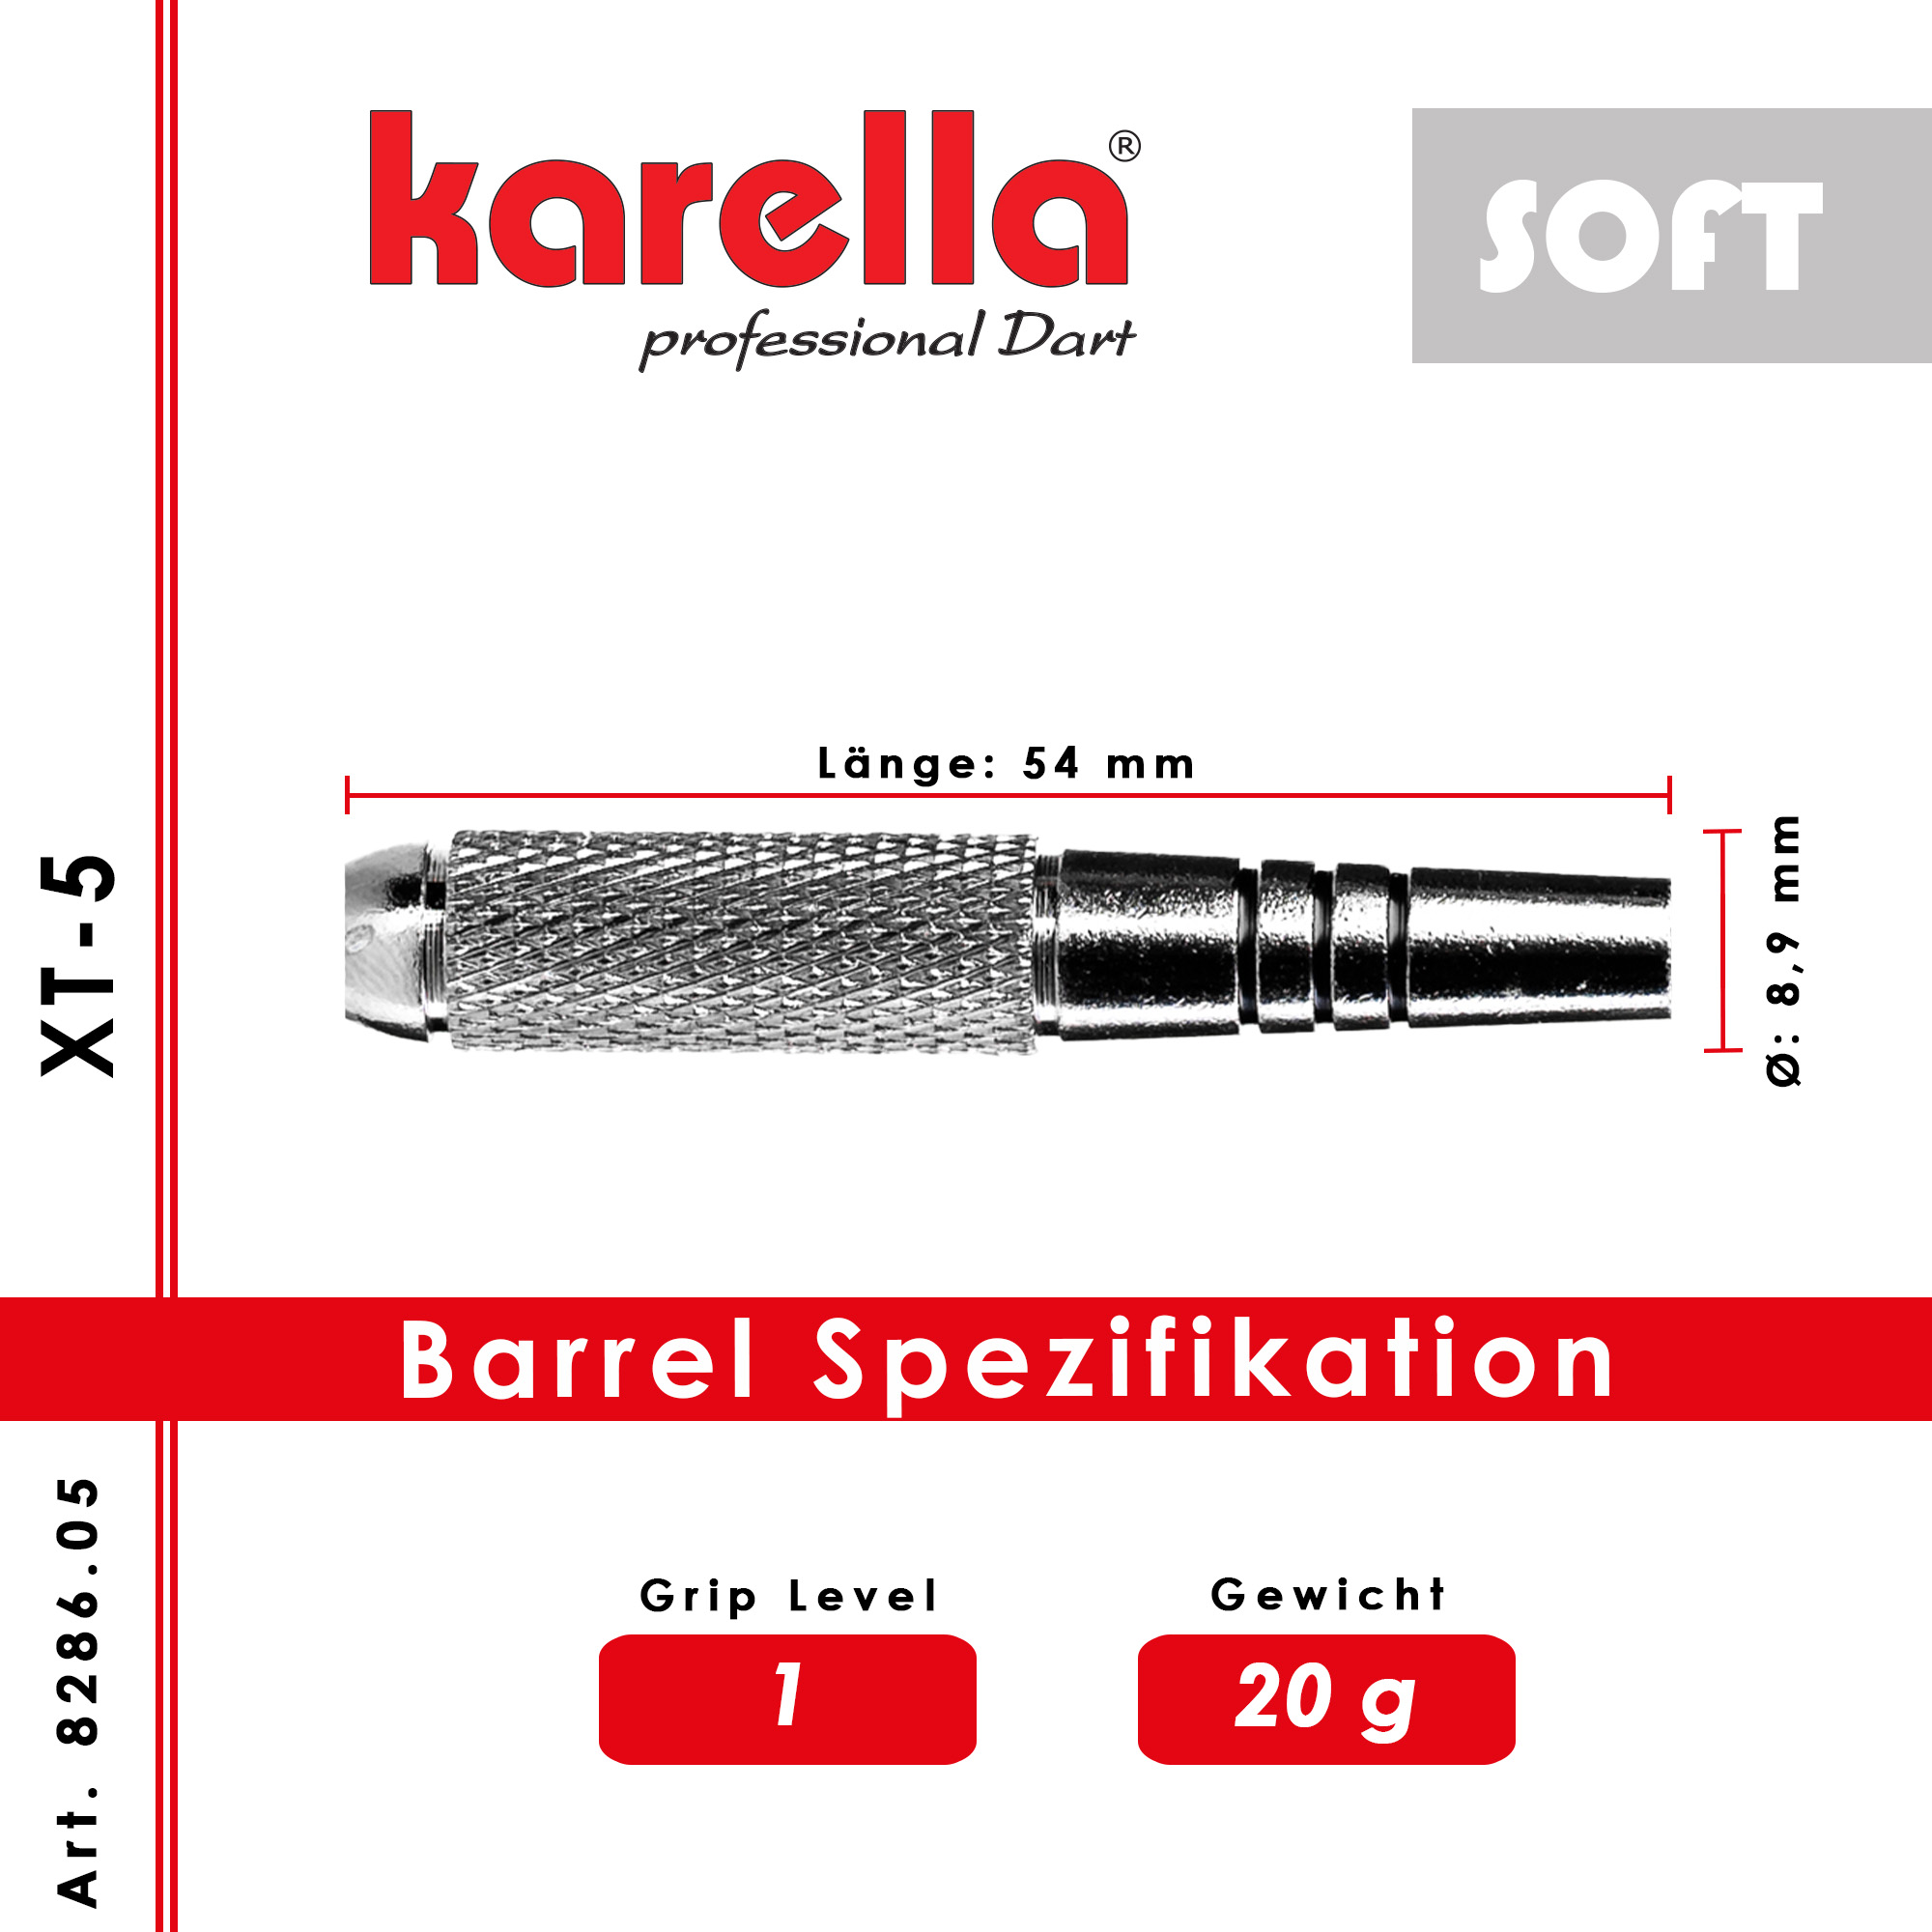 Softdart Karella XT-5 20g